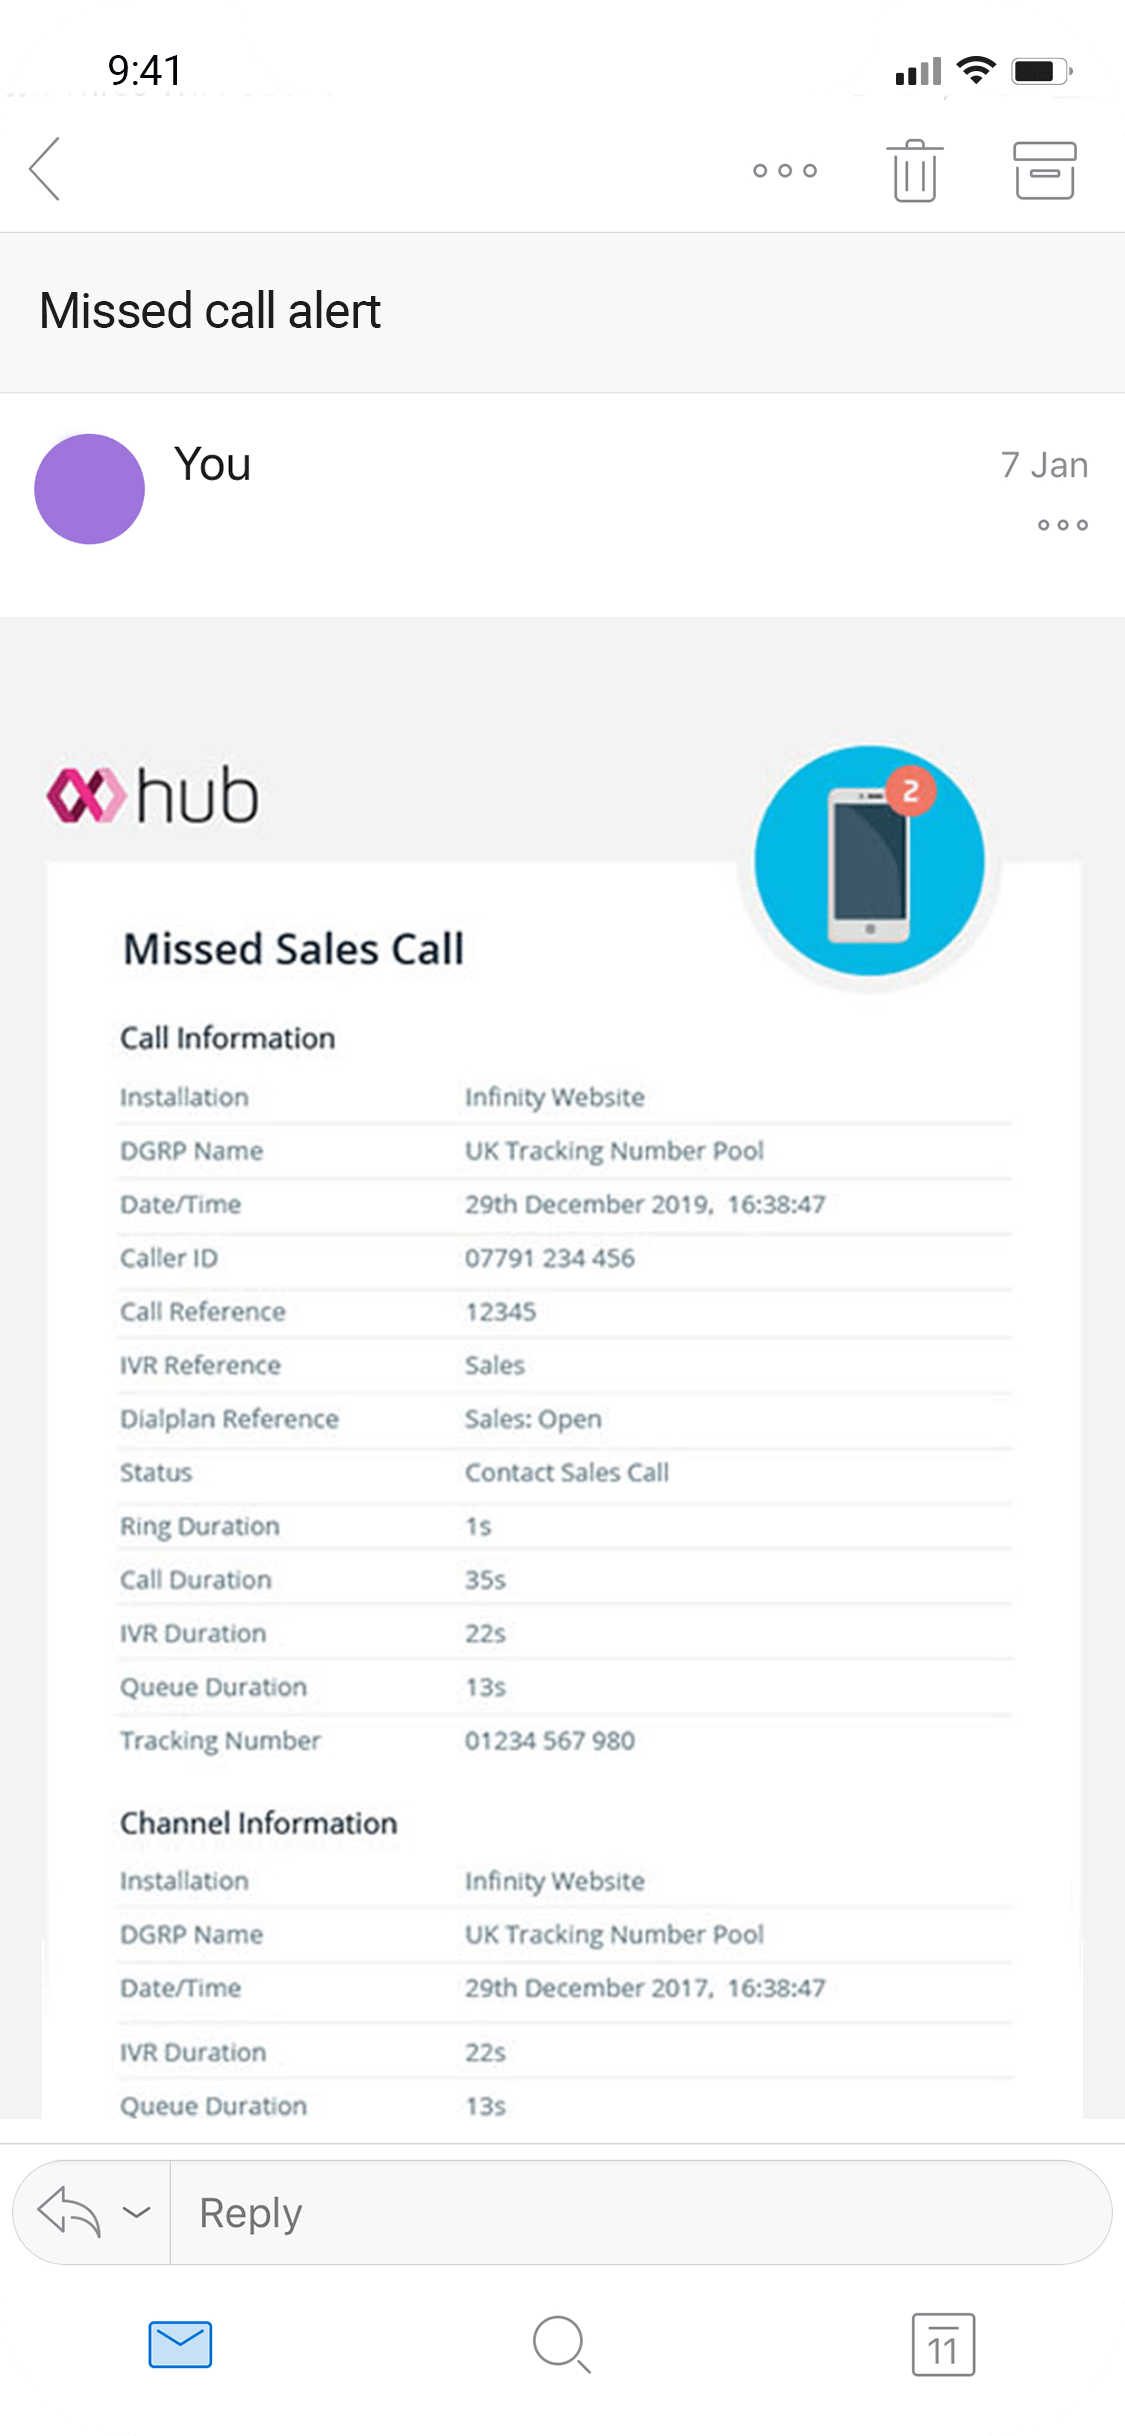 Hub - Missed call alert email